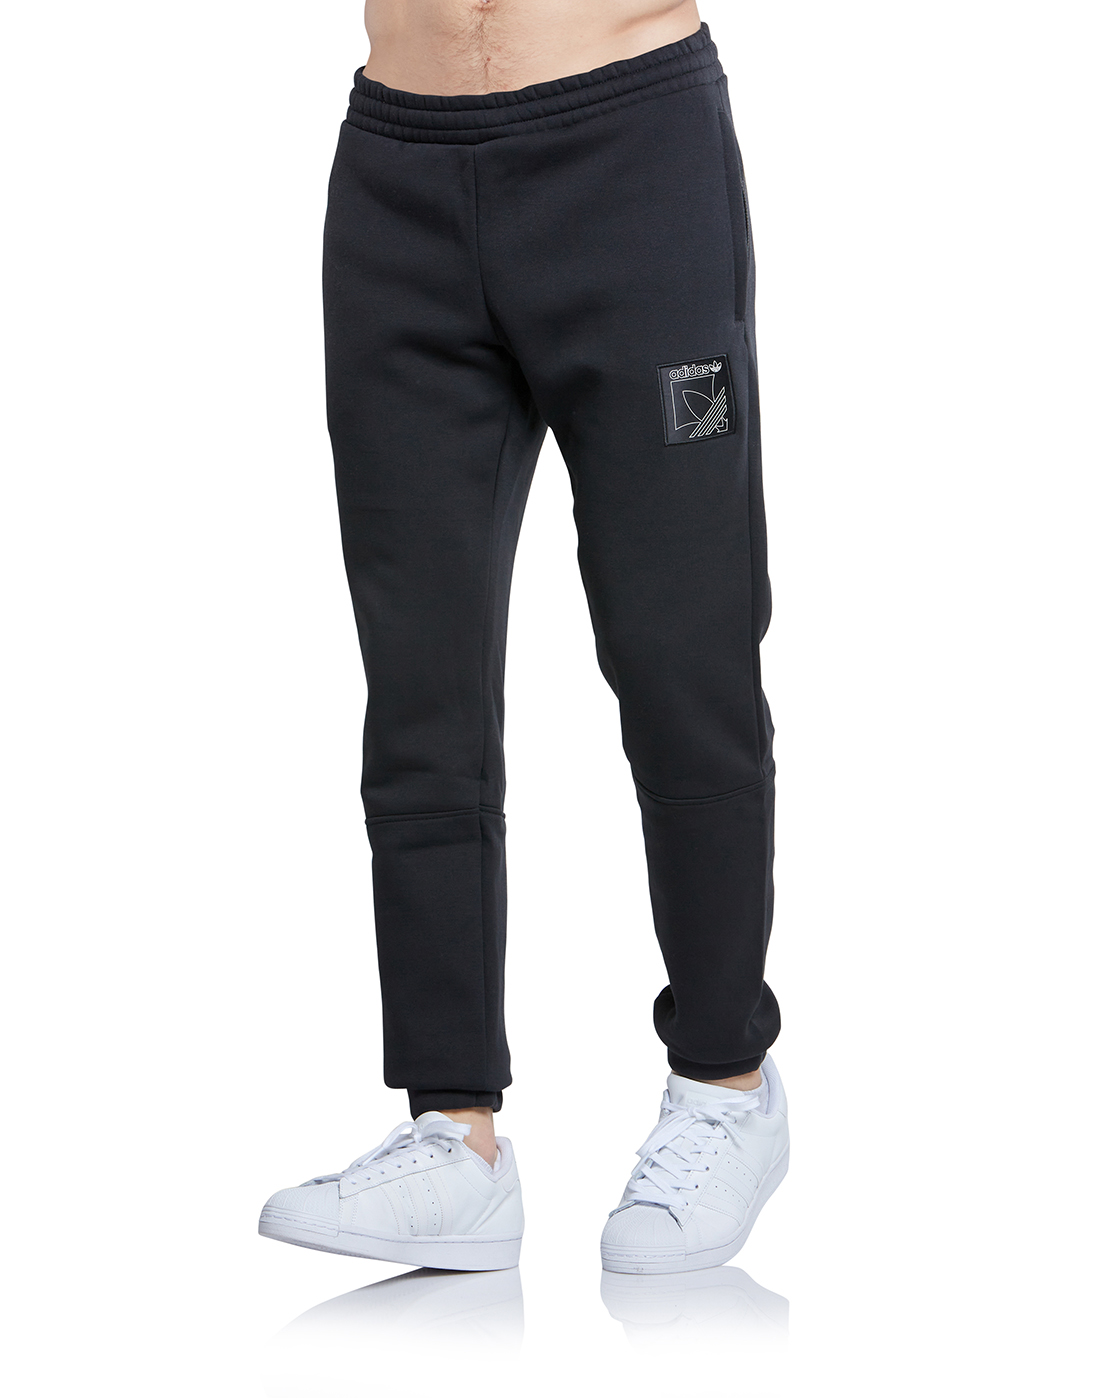 adidas Originals Mens Outline Logo Fleece Pants - Black | Life Style ...